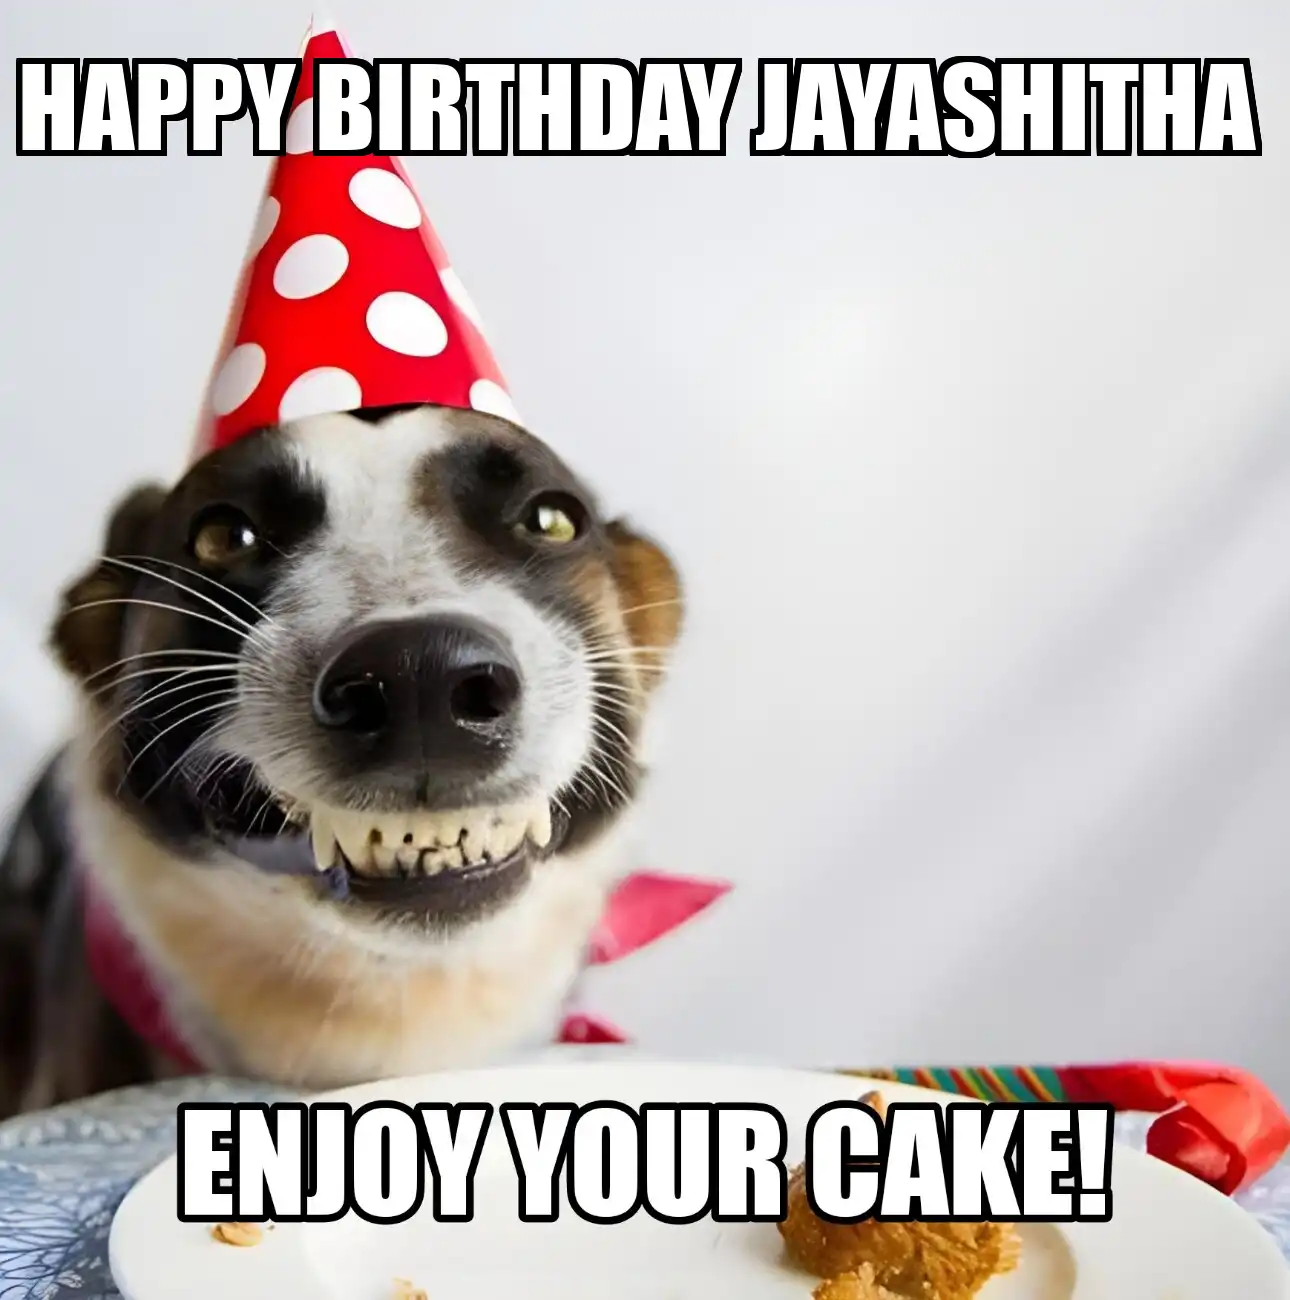 Happy Birthday Jayashitha Enjoy Your Cake Dog Meme